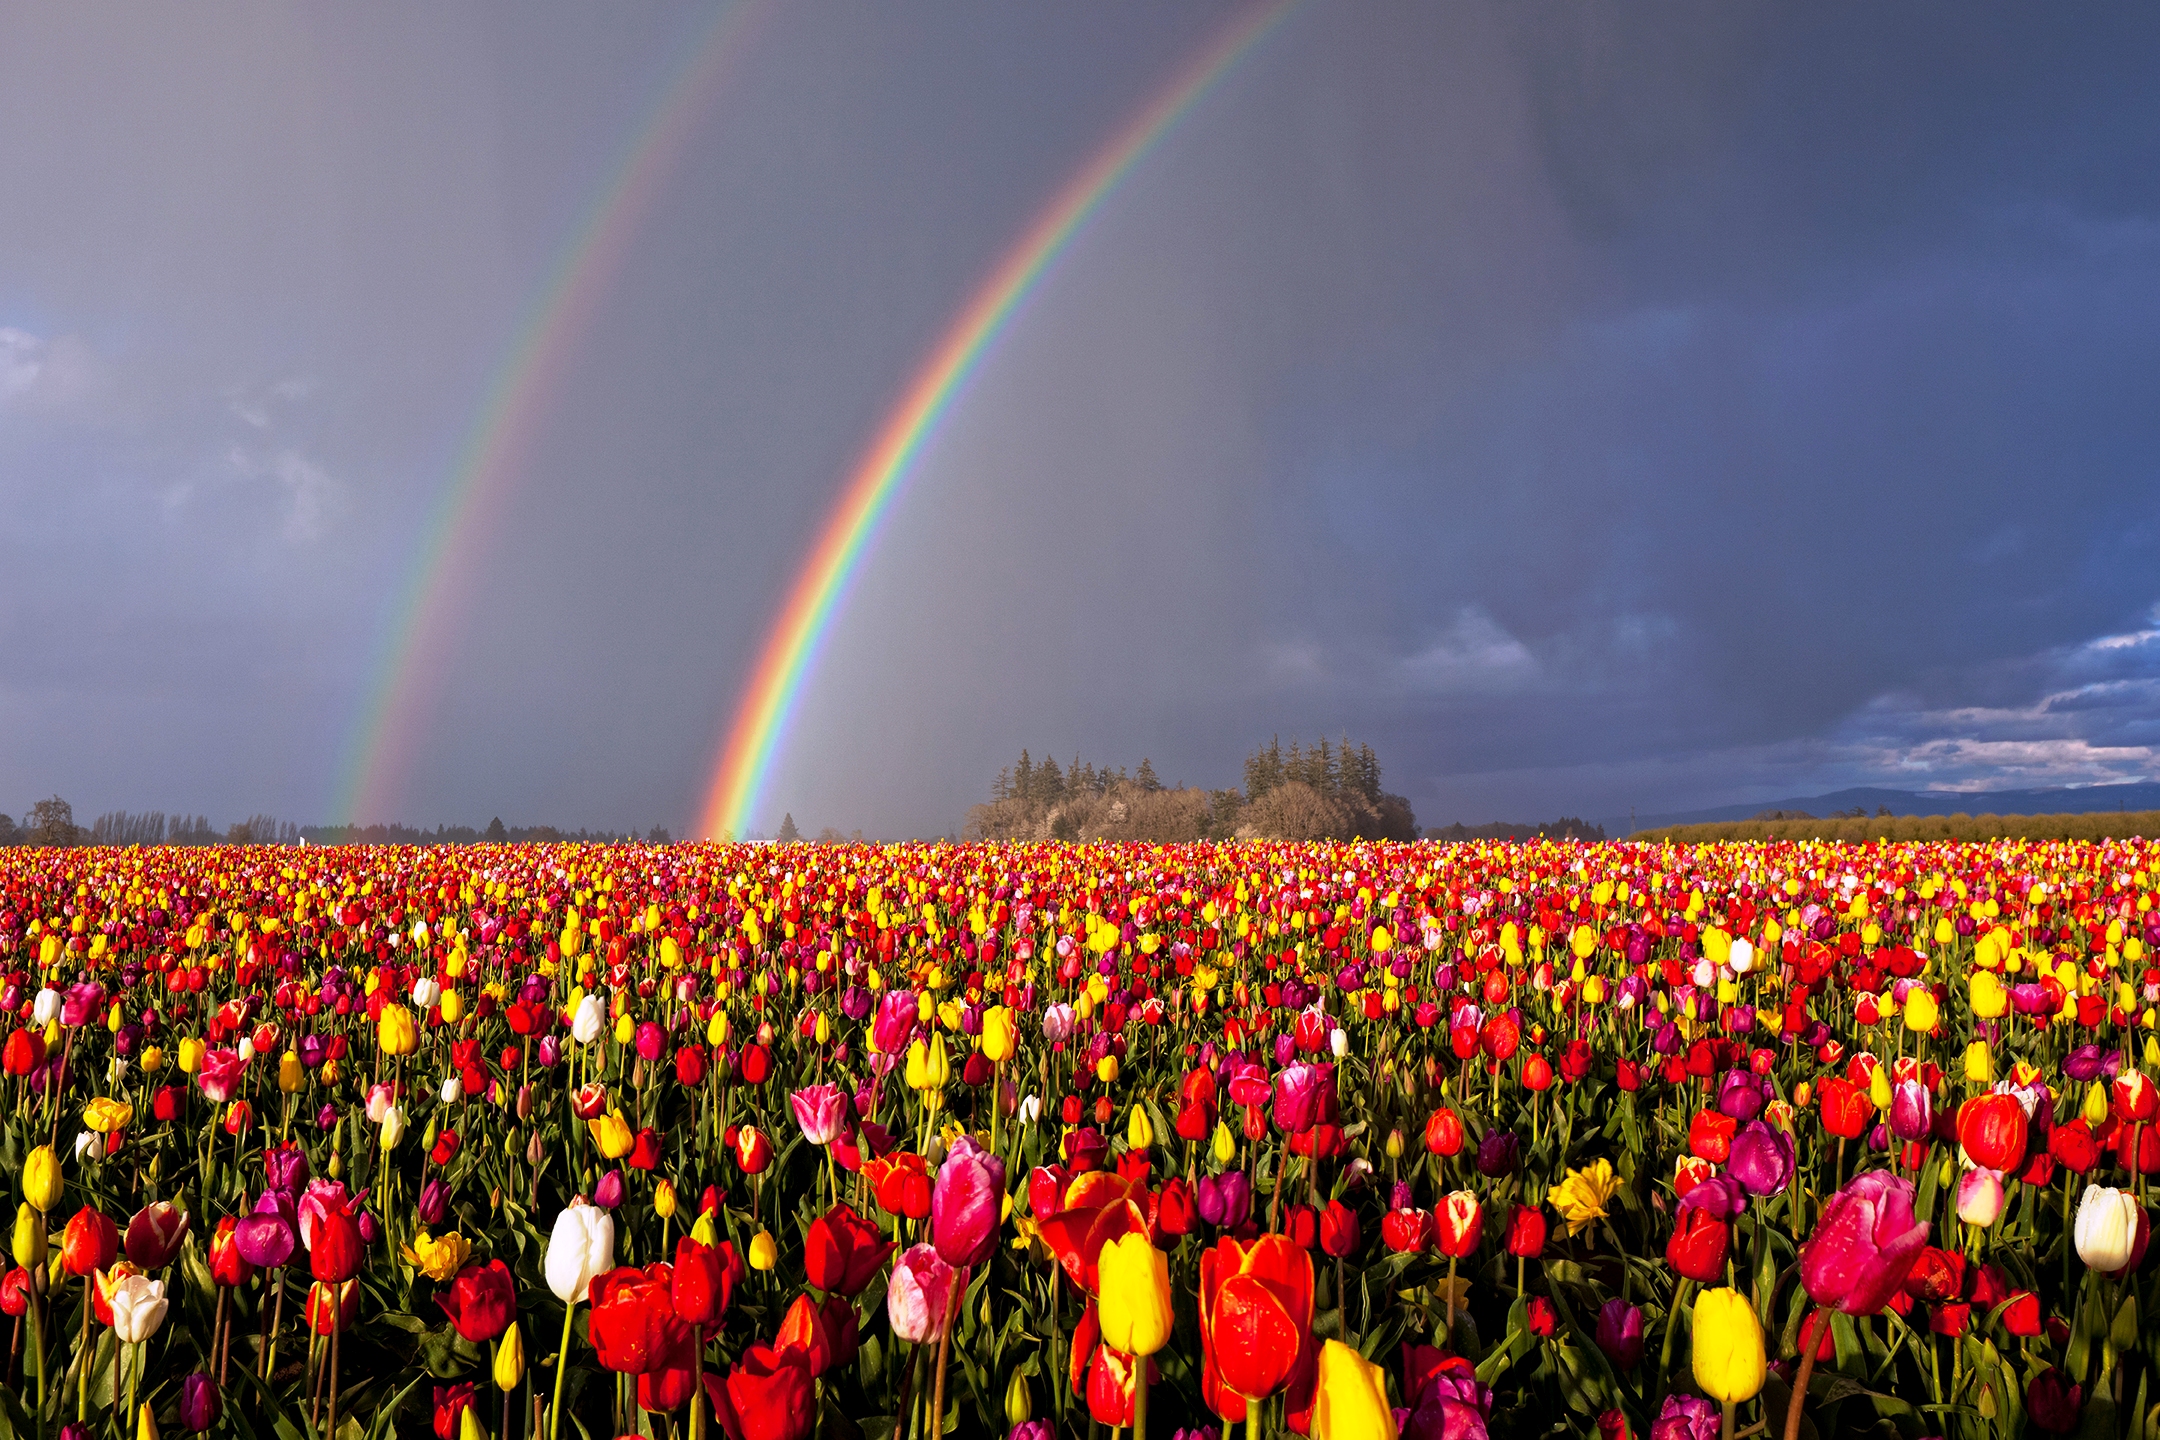 Wallpaper - Field Of Flowers With A Rainbow - HD Wallpaper 